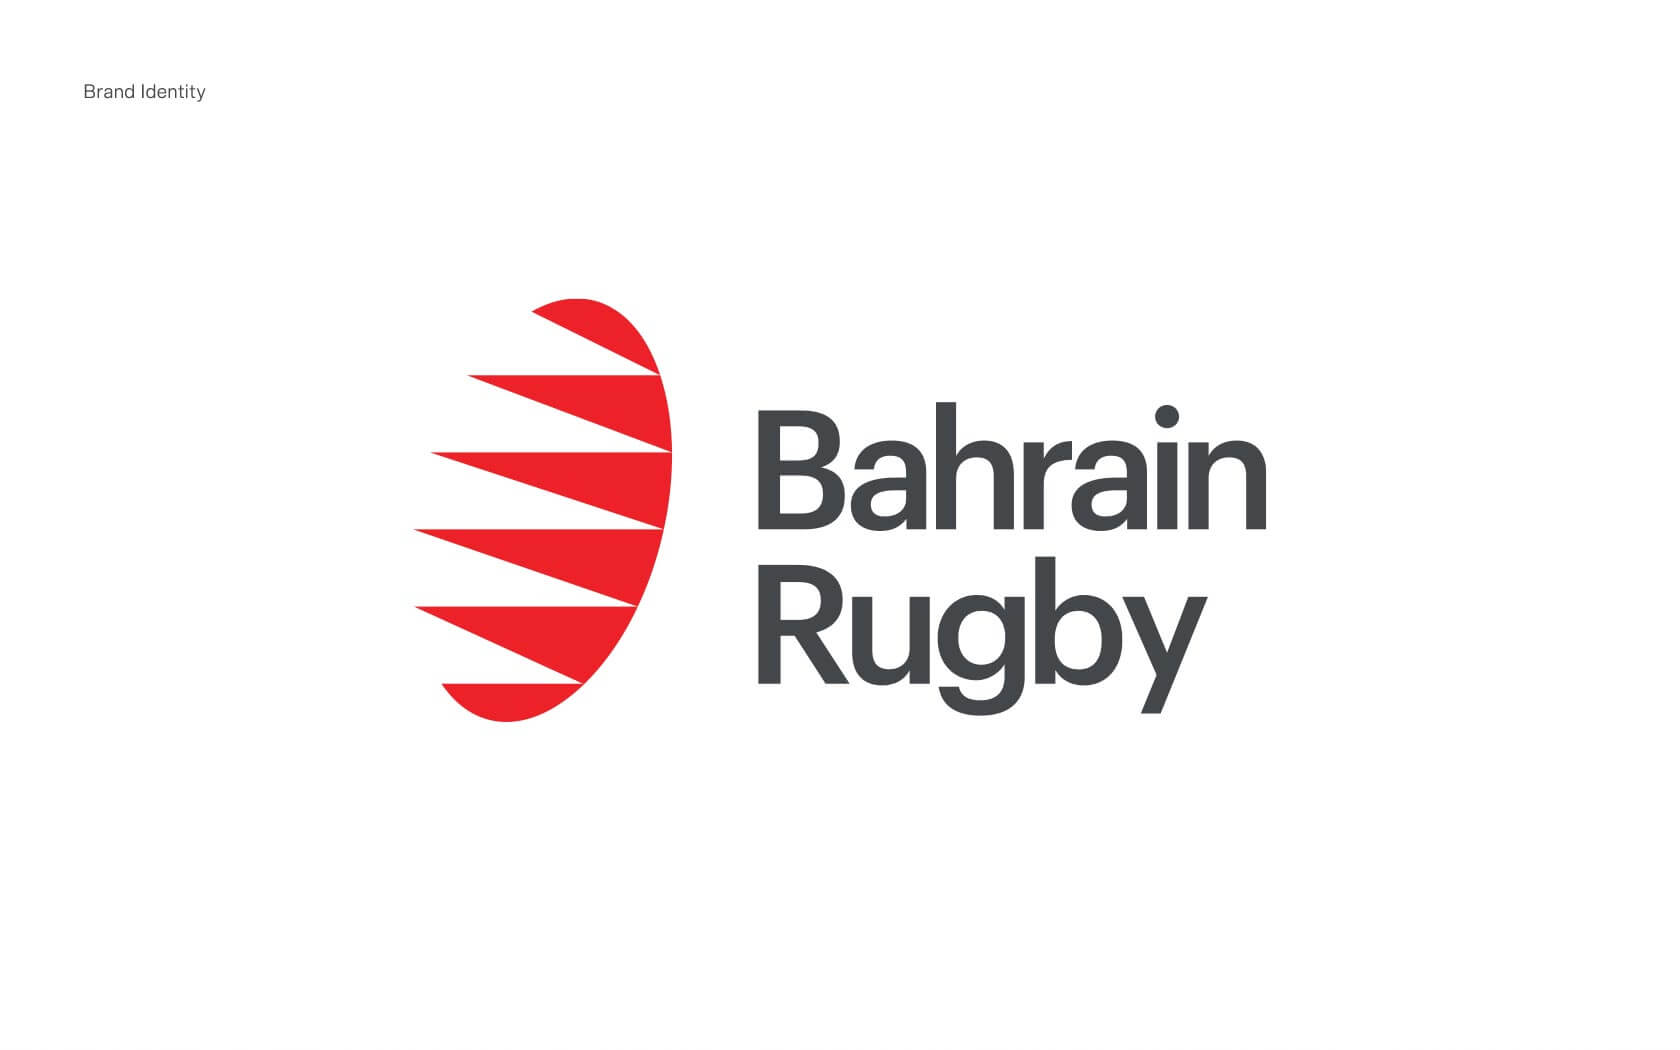 Bahrain Rugby. Brand logo mark